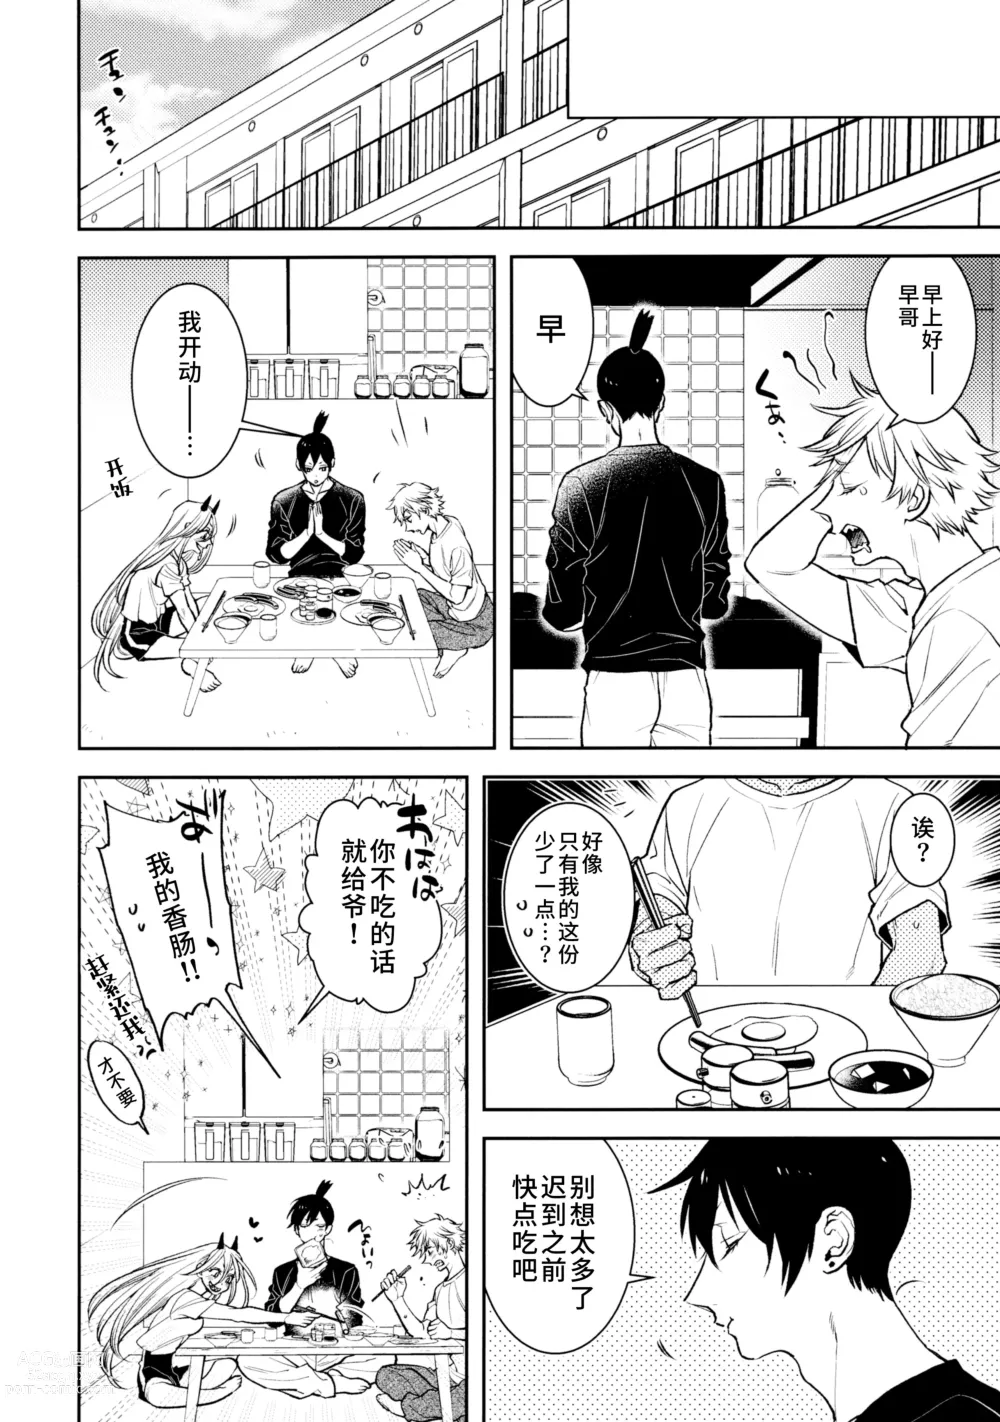 Page 21 of doujinshi Koi no Starter Rope